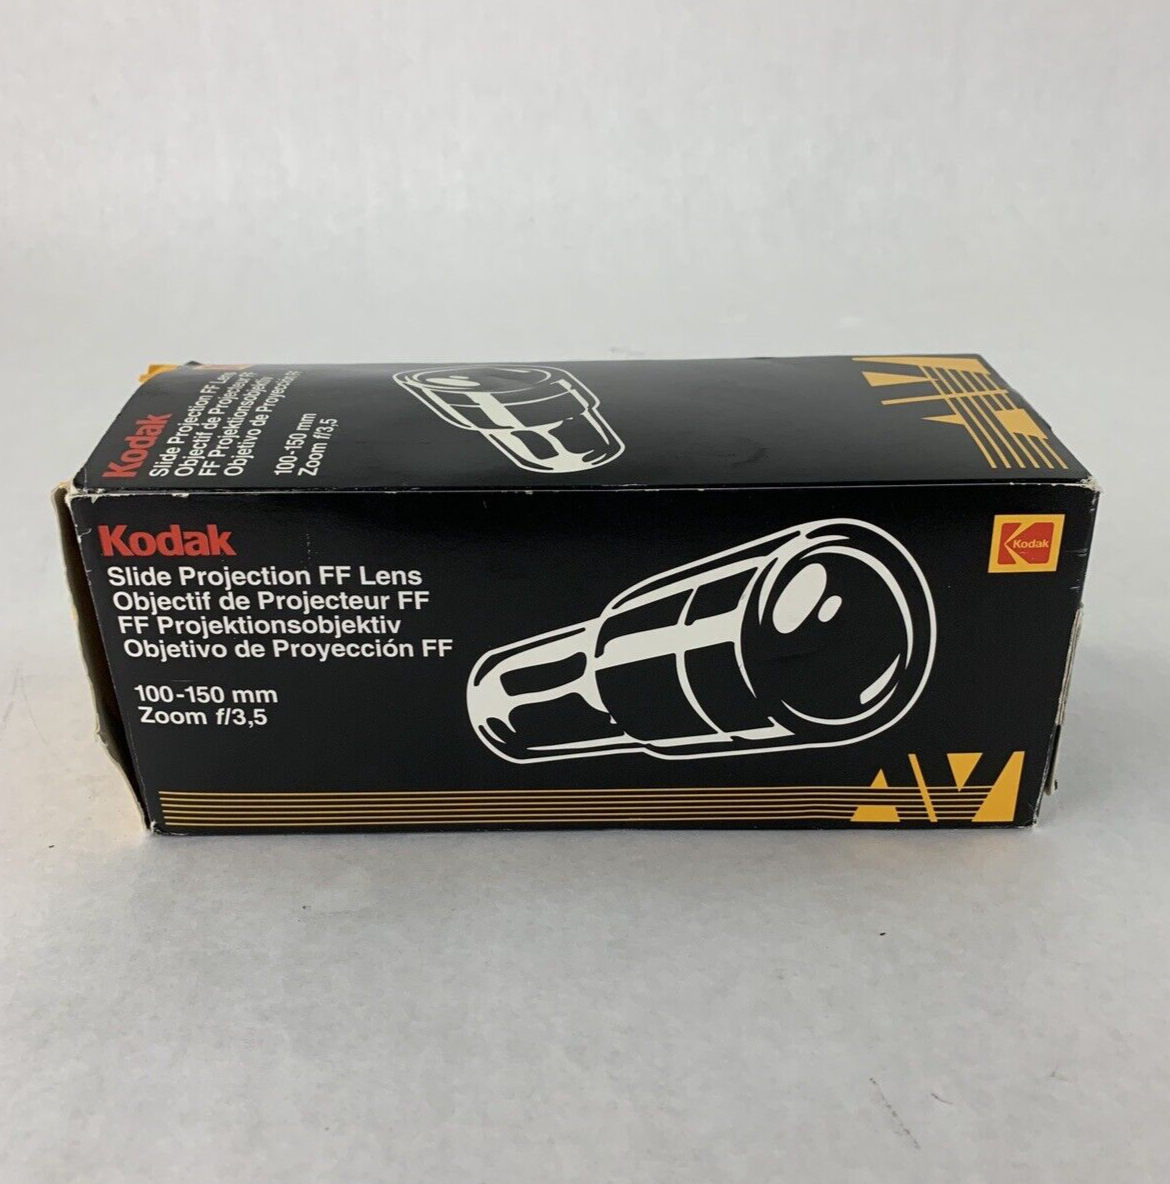 Box Opened Kodak Slide Projection FF LENS 100-150 mm ZOOM f/3,5  3432